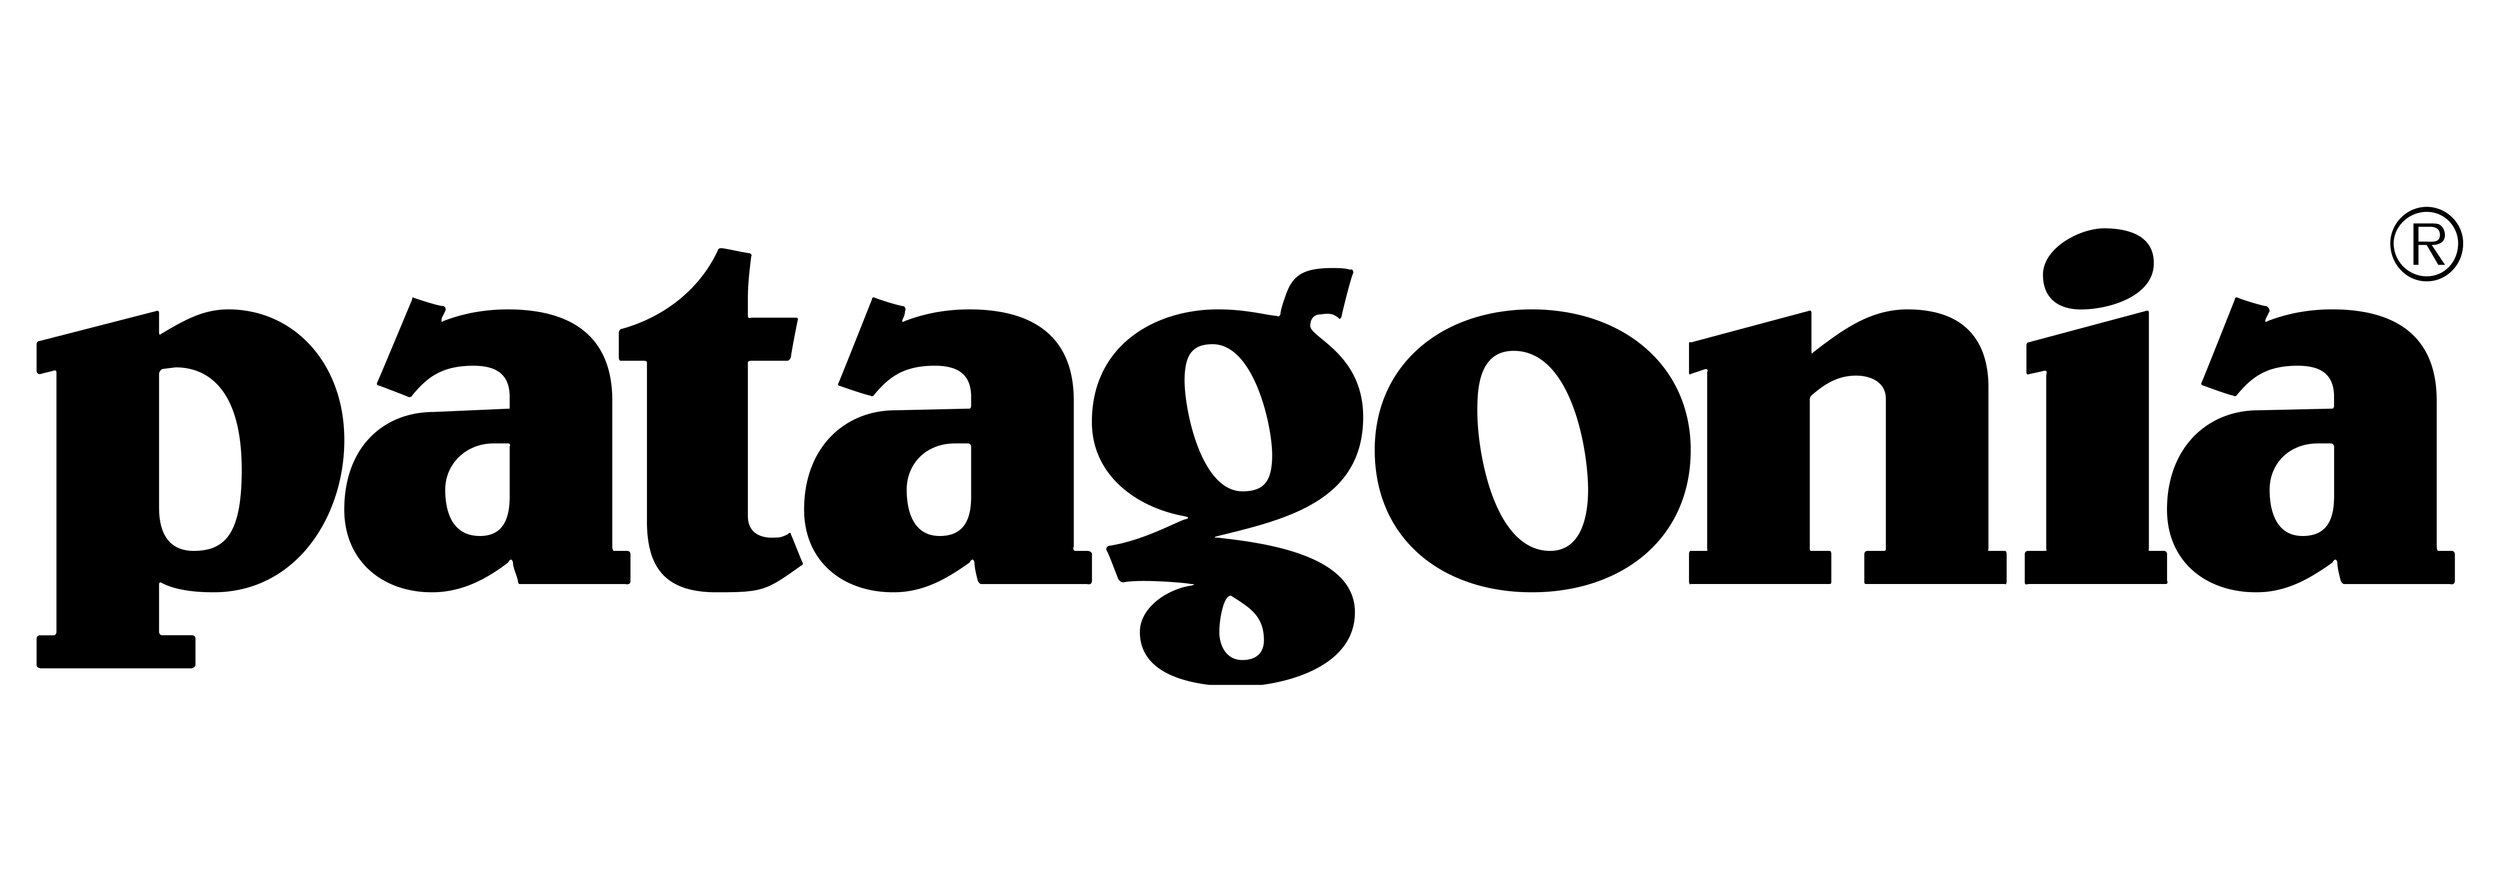 patagonia-logo-vector.png